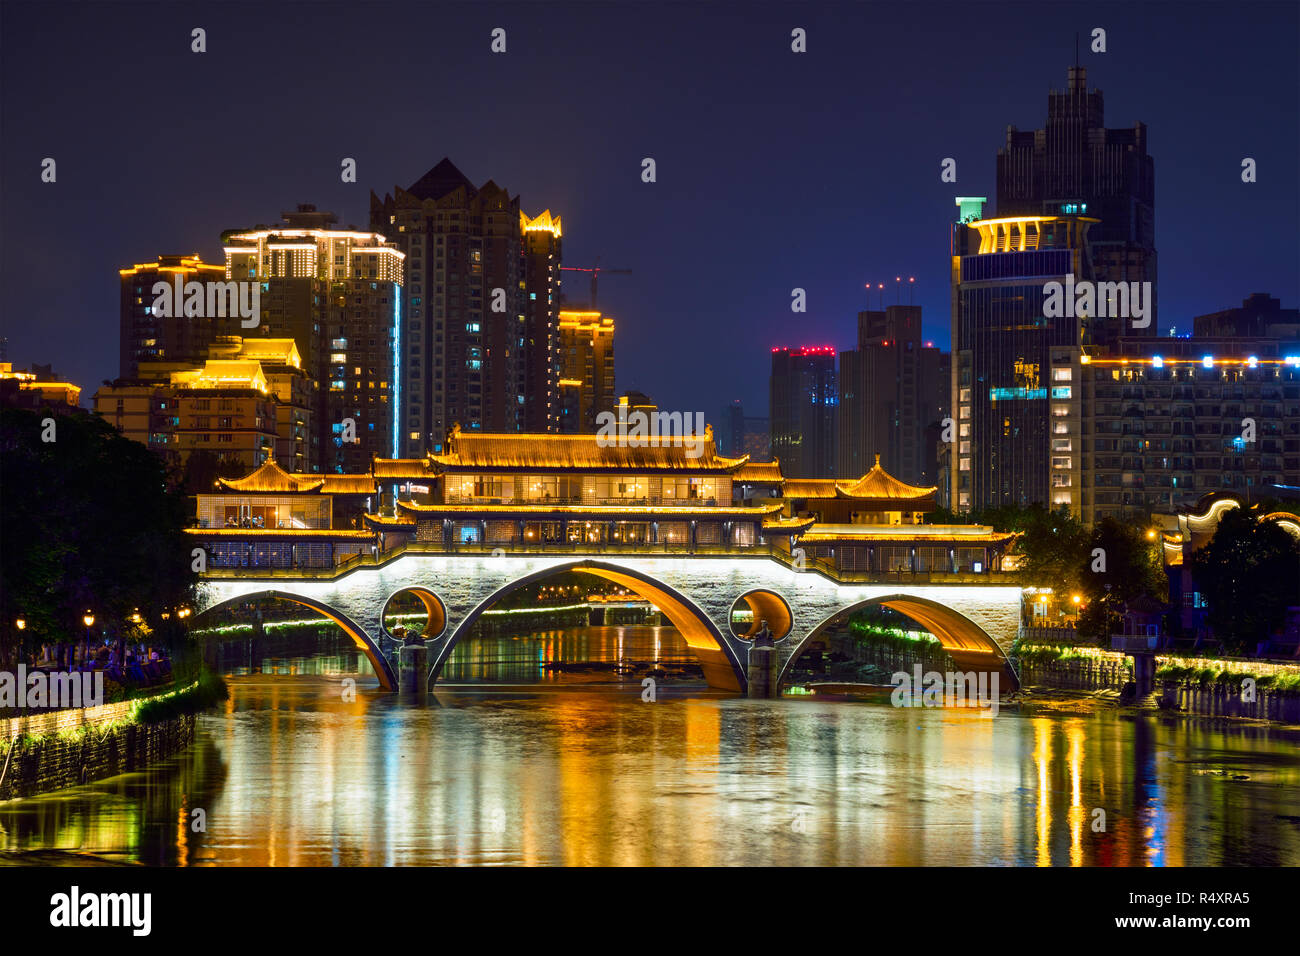 Anshun bridge at night, Chengdu, Chine Banque D'Images